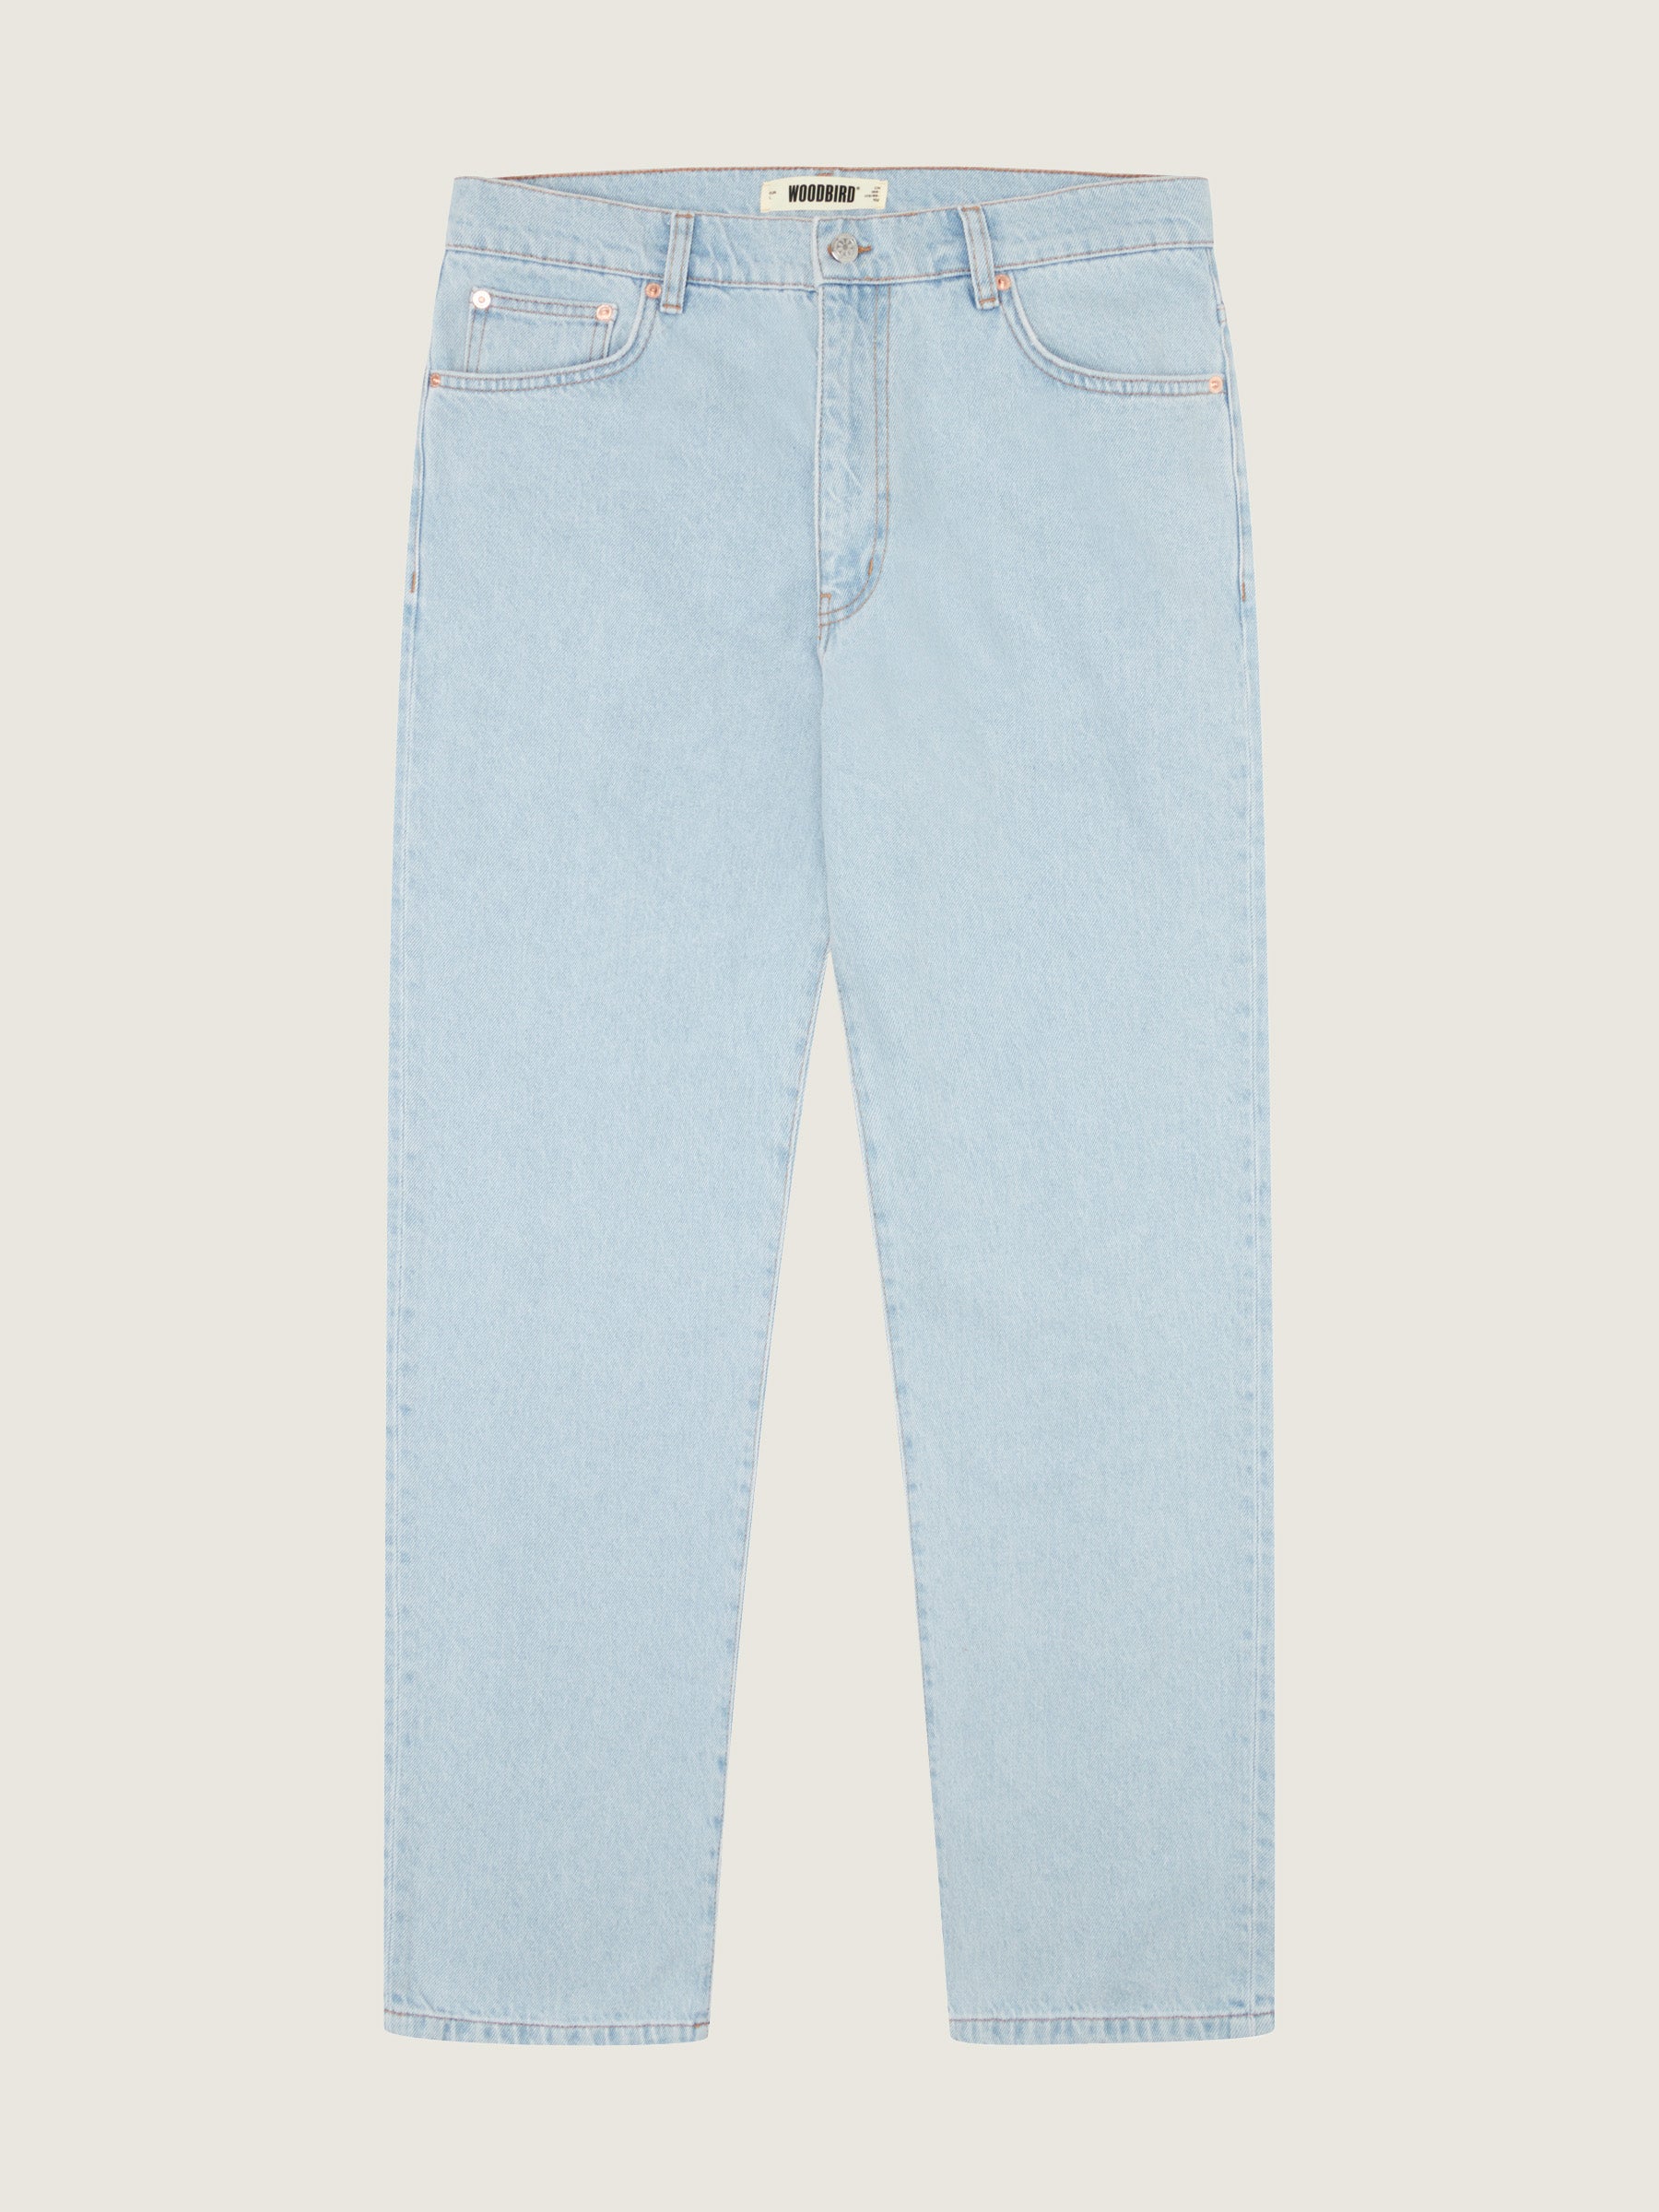 Woodbird Leroy Brando Jeans Jeans 90sBlue